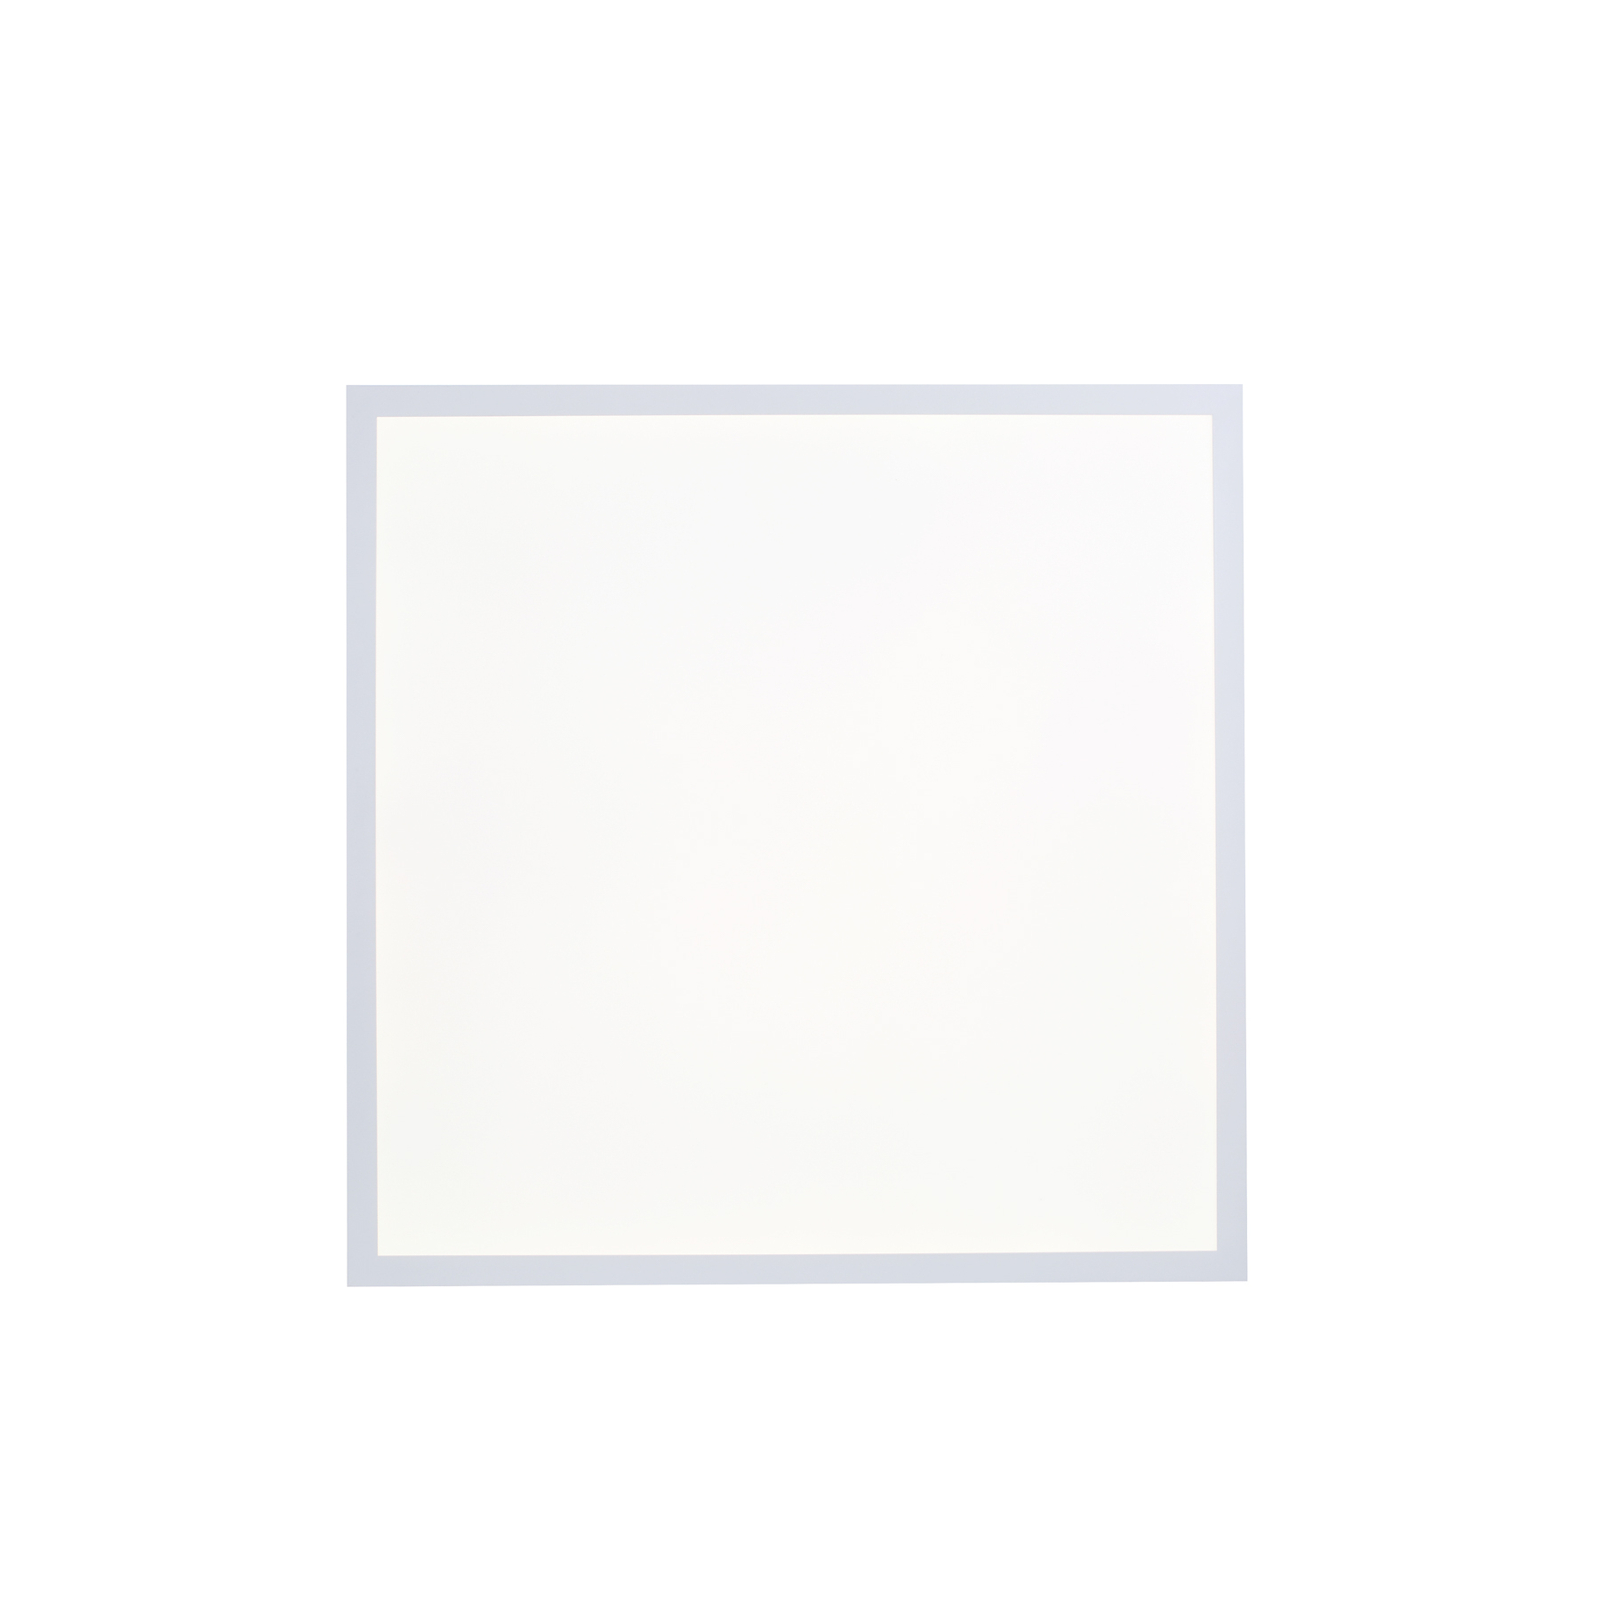 Painel LED Sylvania Start, branco, 62 x 62 cm, 30 W, UGR19, 840